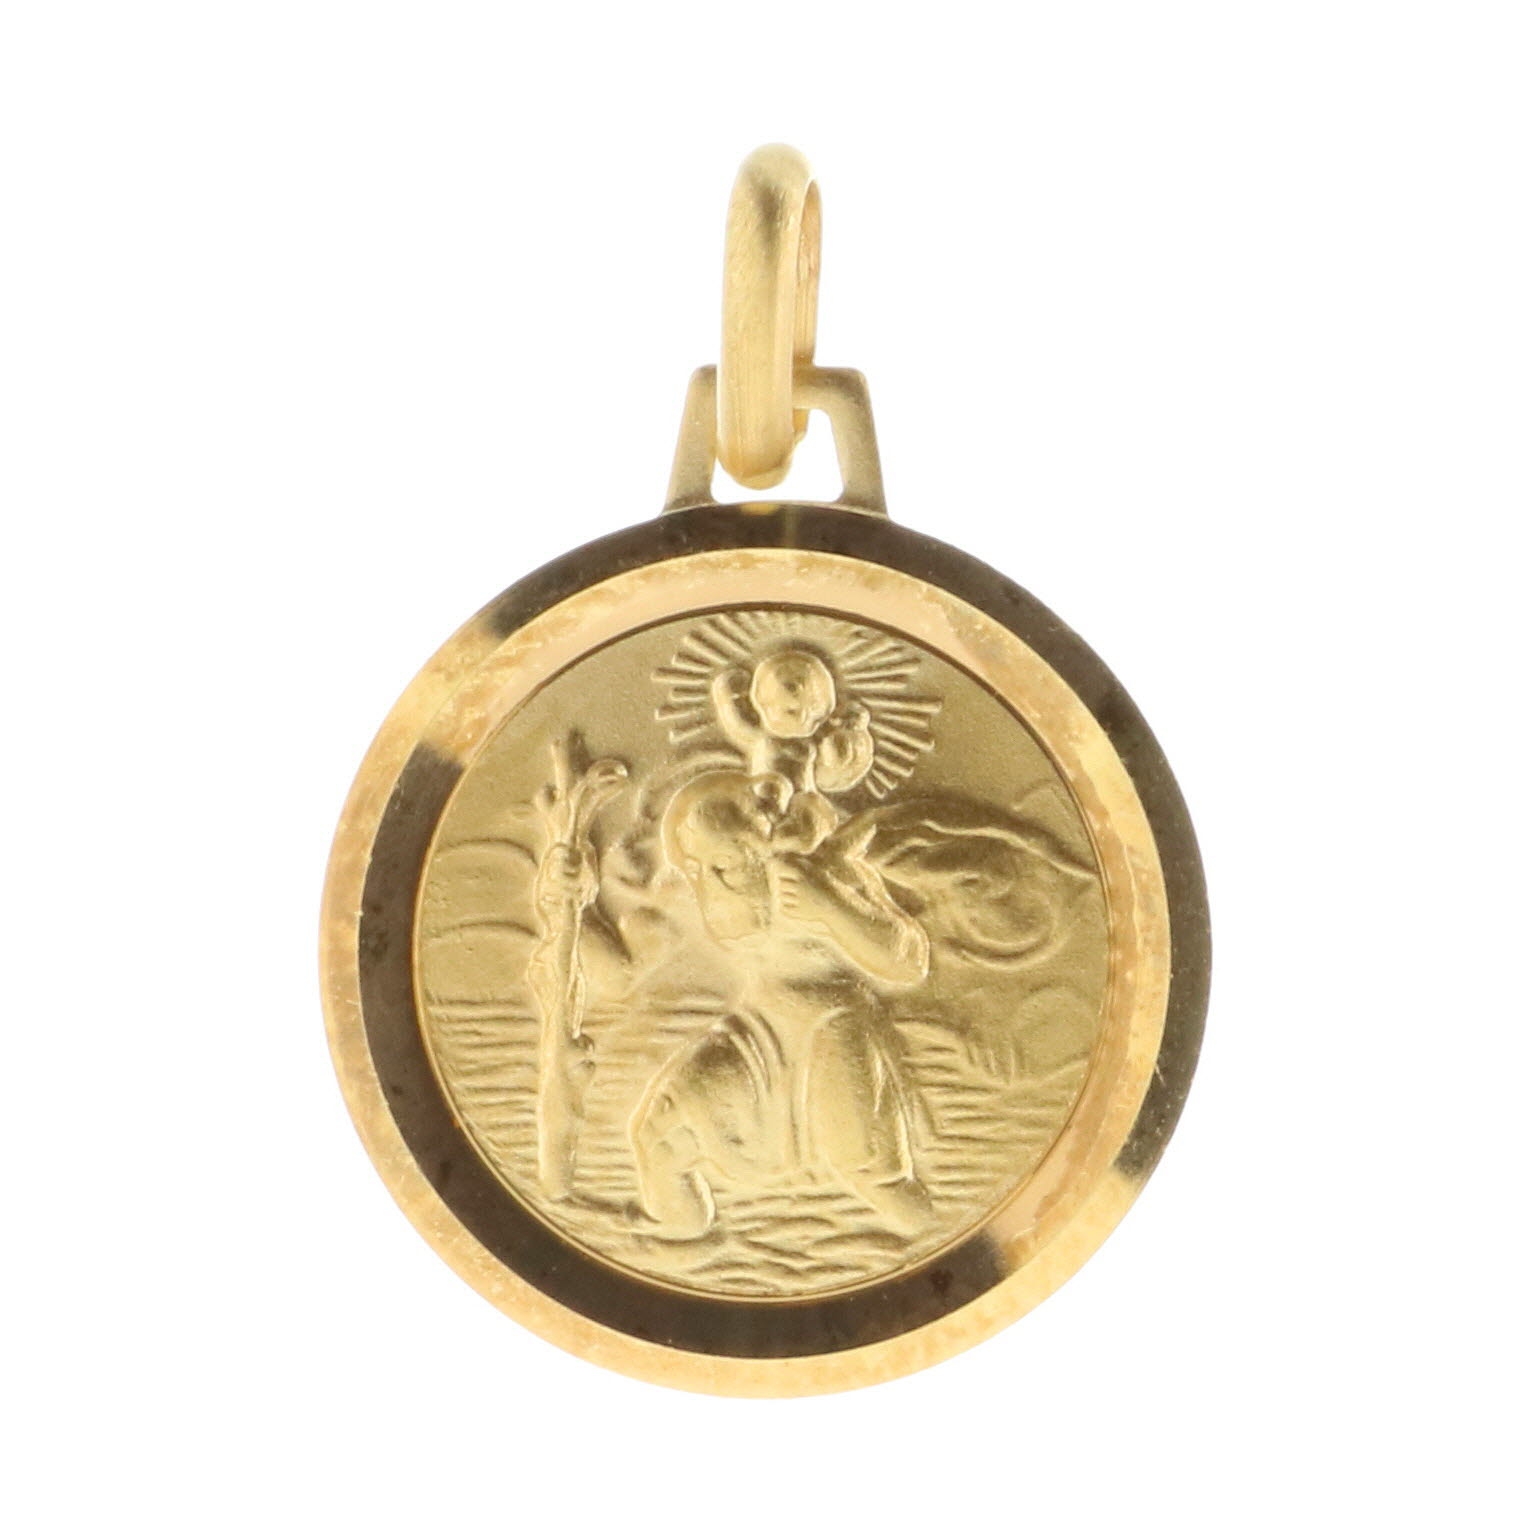 1 Inch Size of a Quarter Saint Bernadette Religious Medal Sterling Silver 